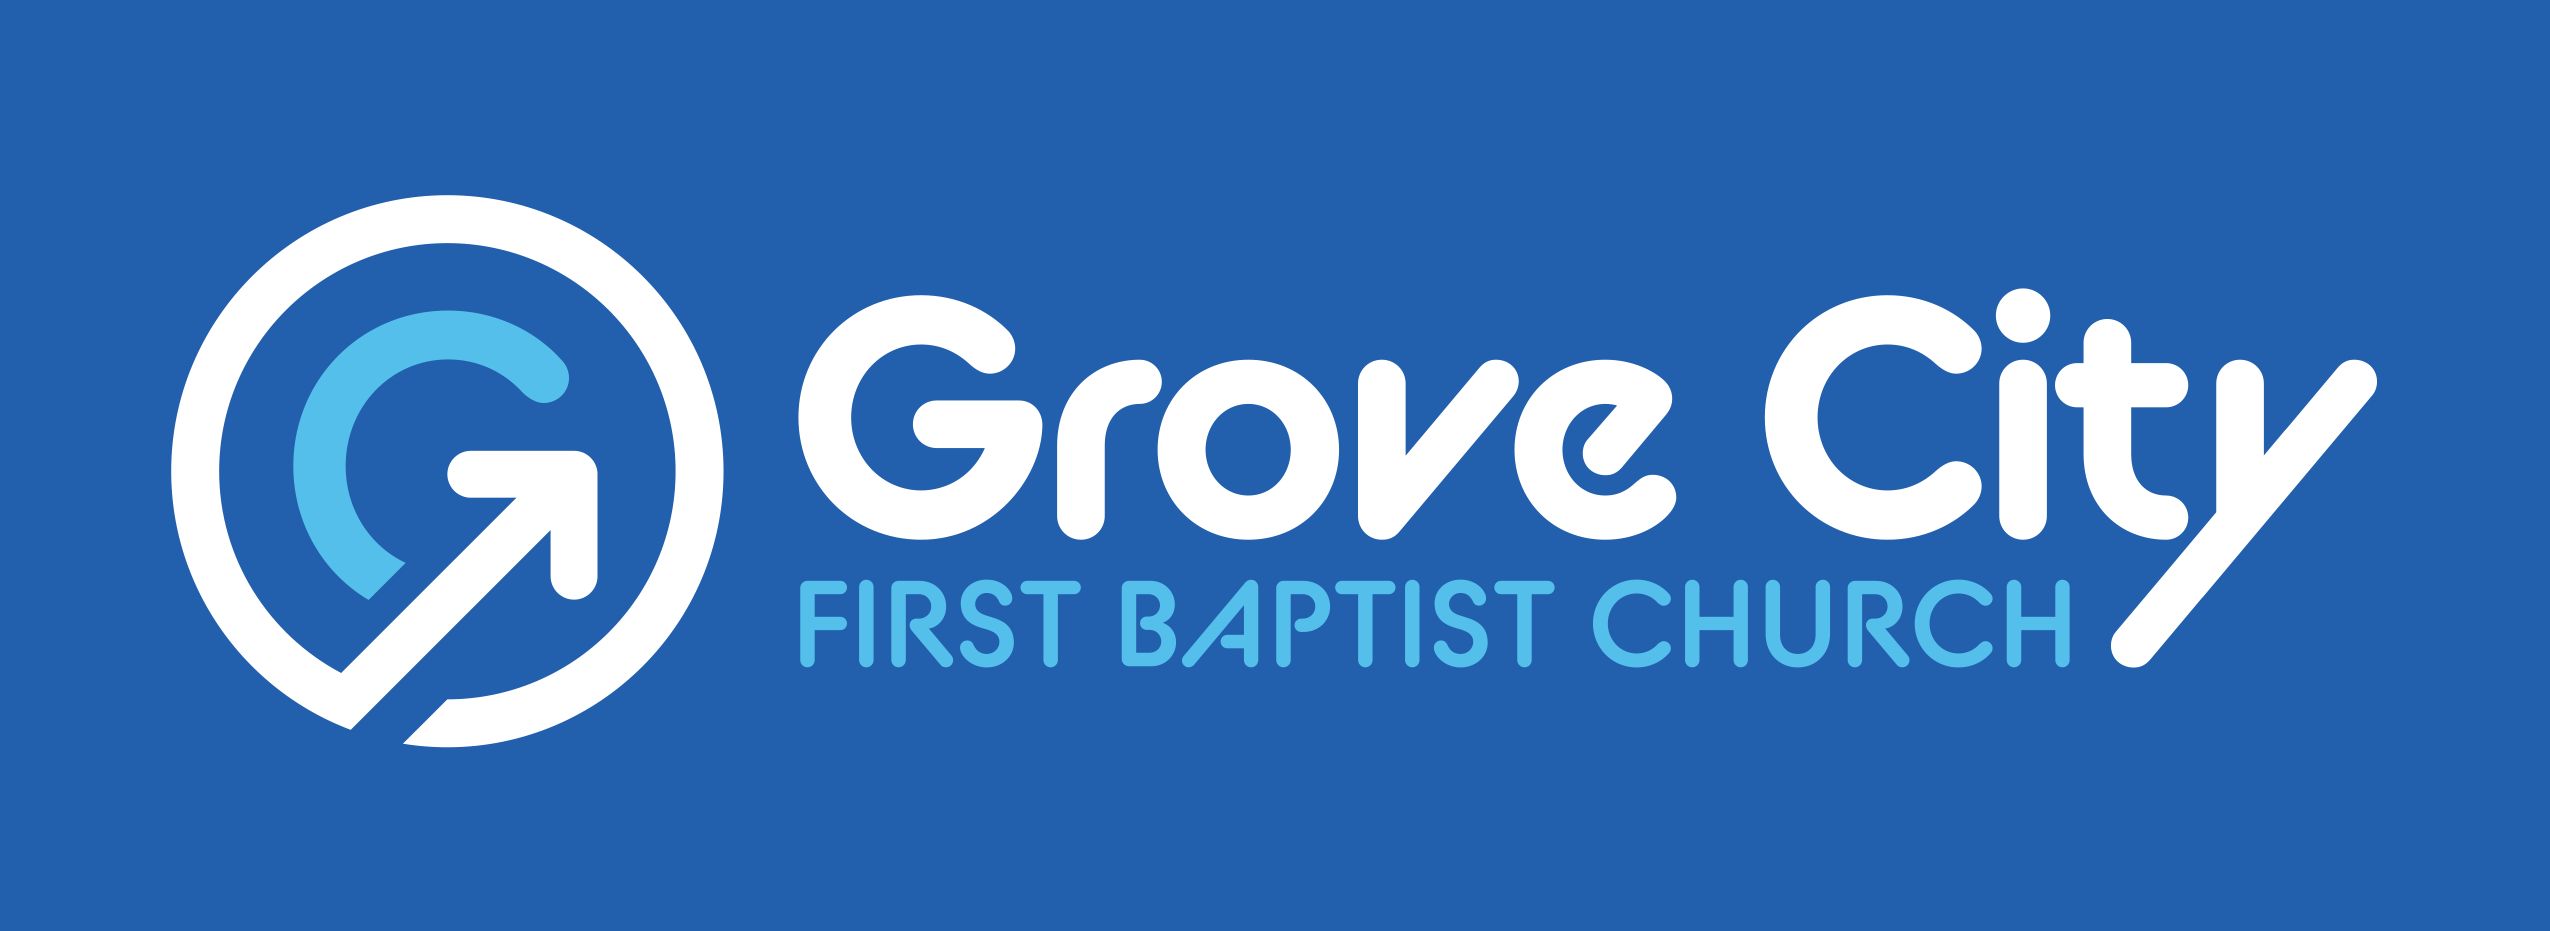 first baptist grove city